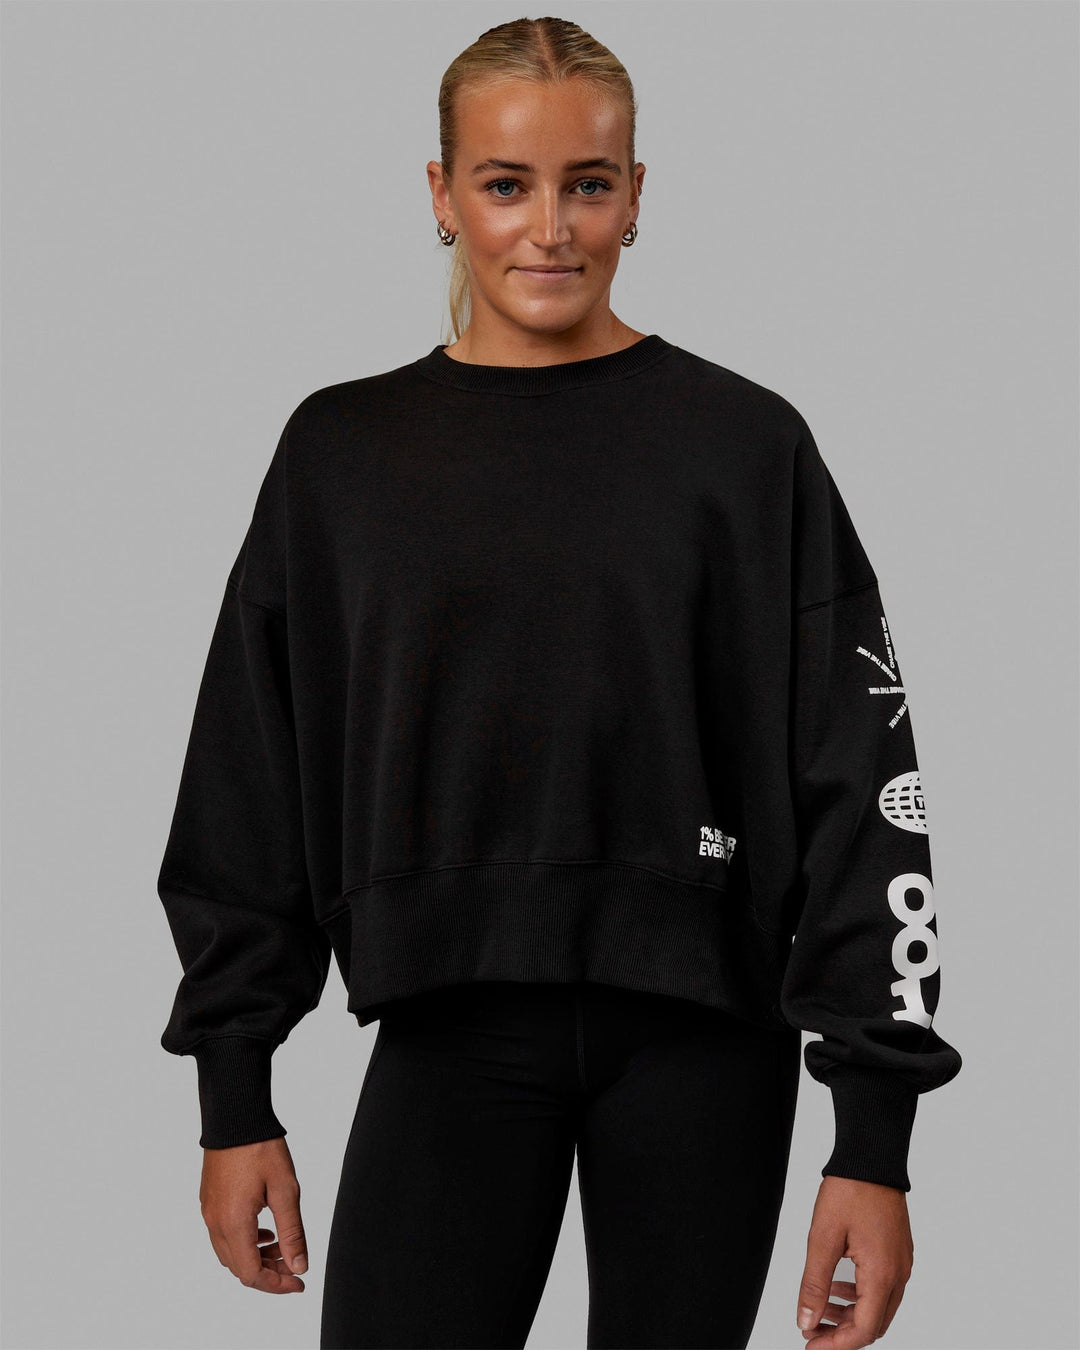 Woman wearing Millennium Sweater - Black